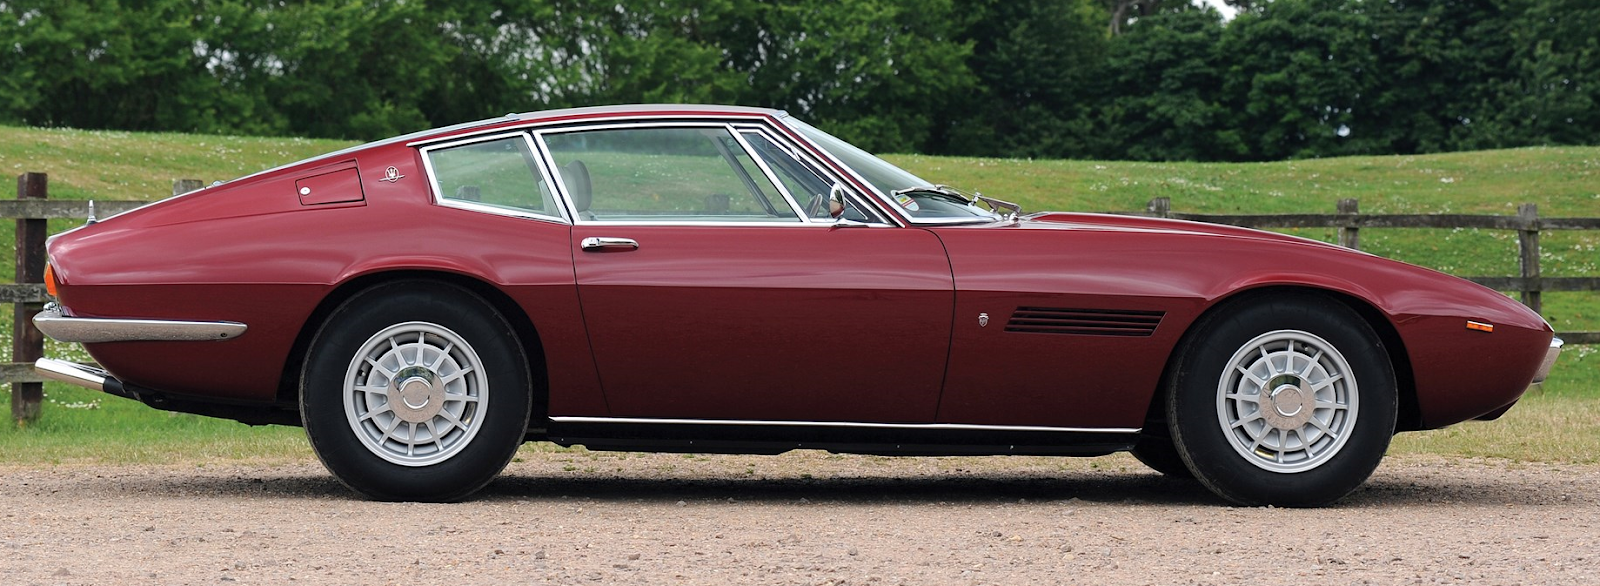 SuperCarWorld: 1970 Maserati Ghibli SS 4.9 Coupé by Ghia